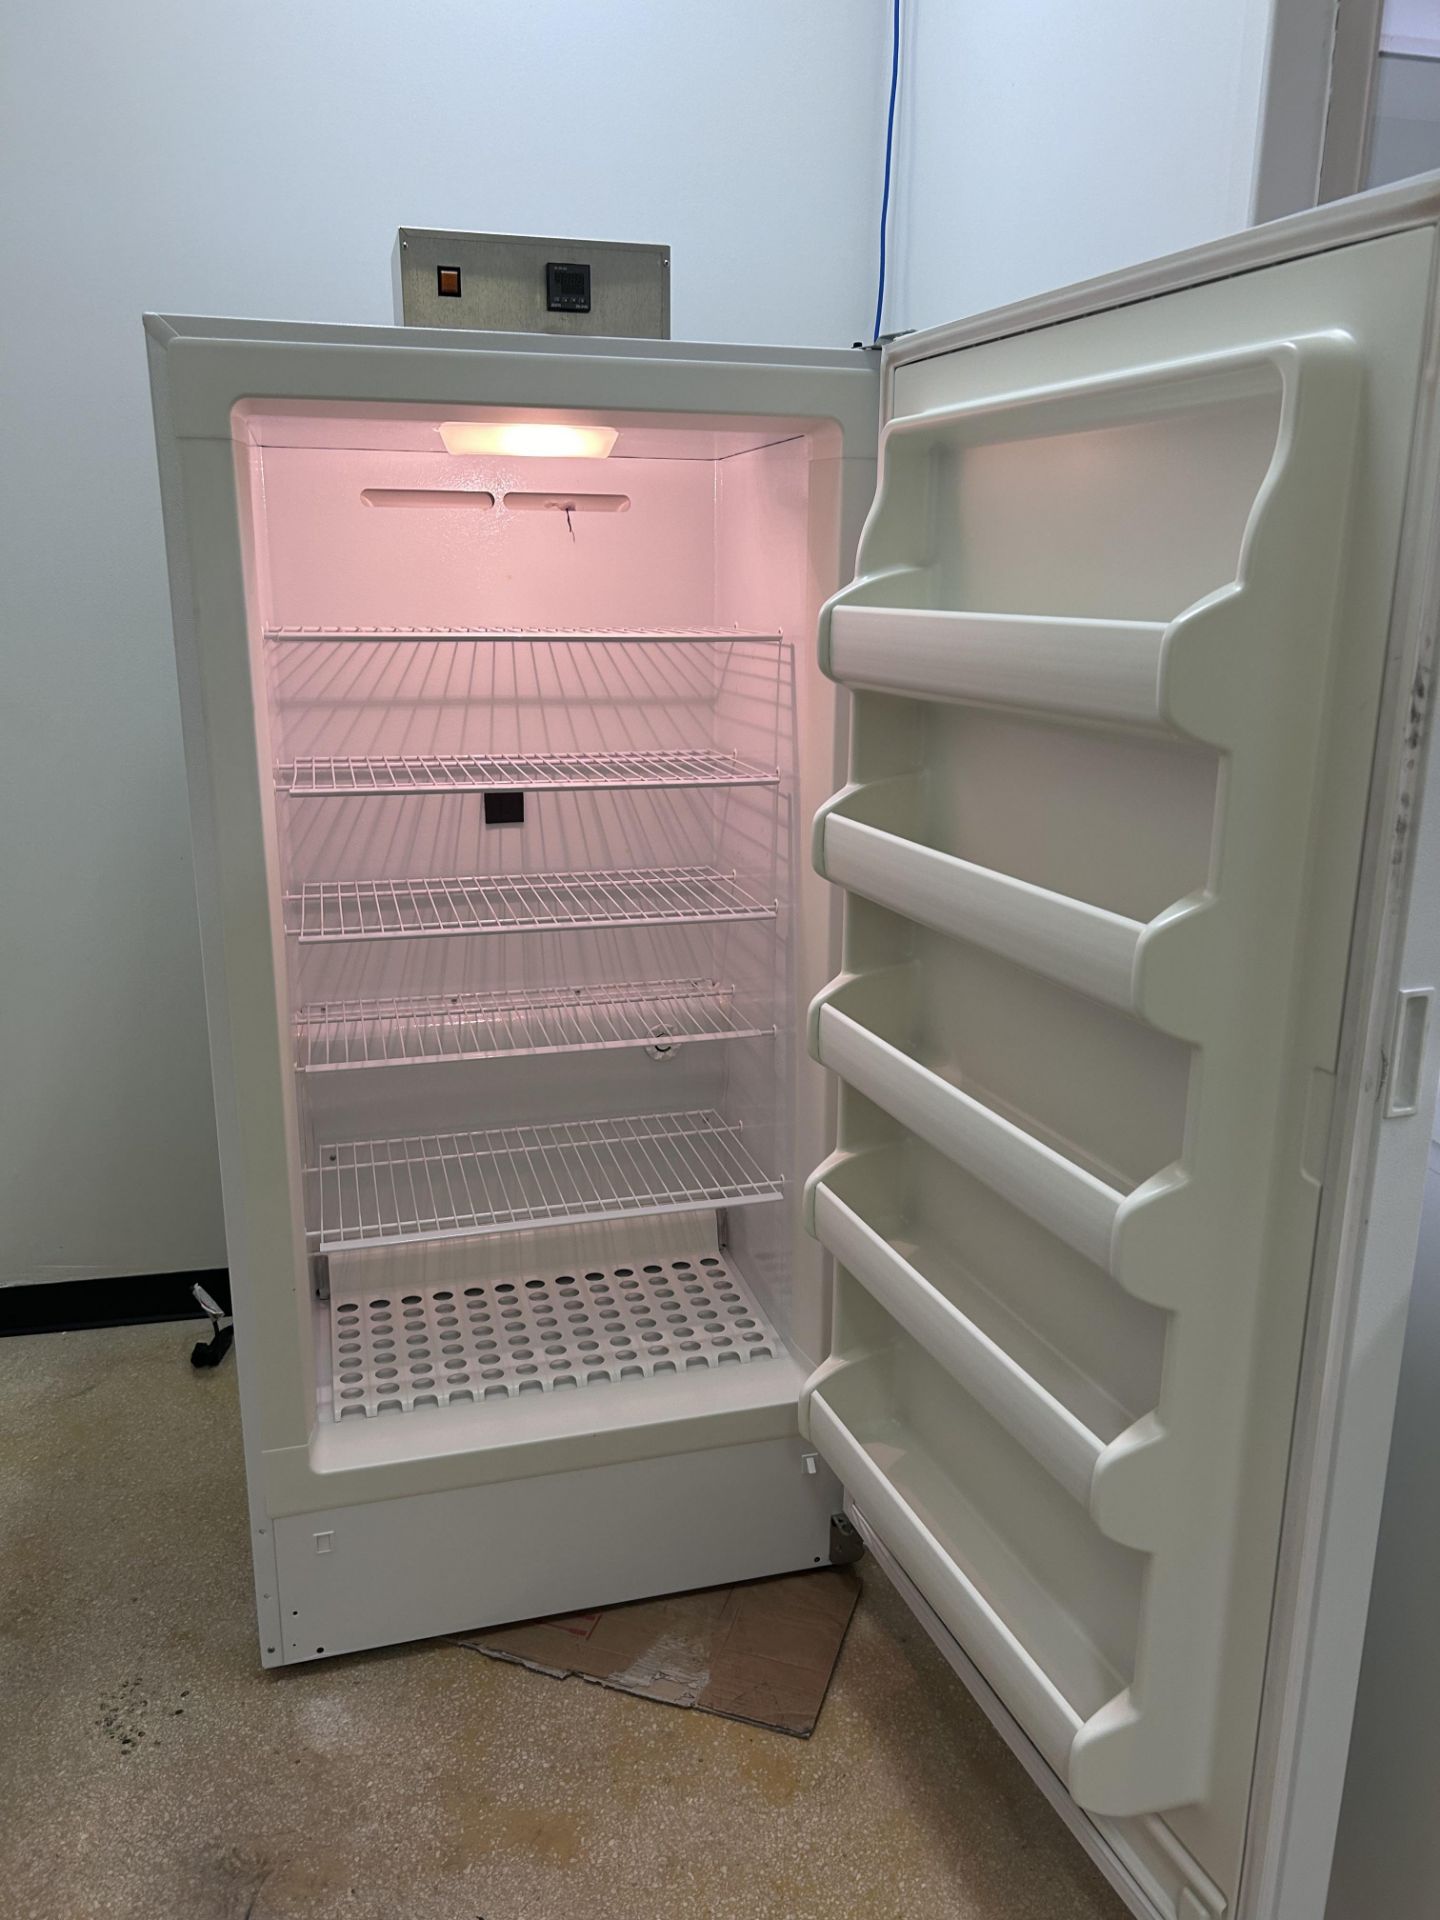 Refrigerator Mod. FFFH17F1RW0 - Image 2 of 4